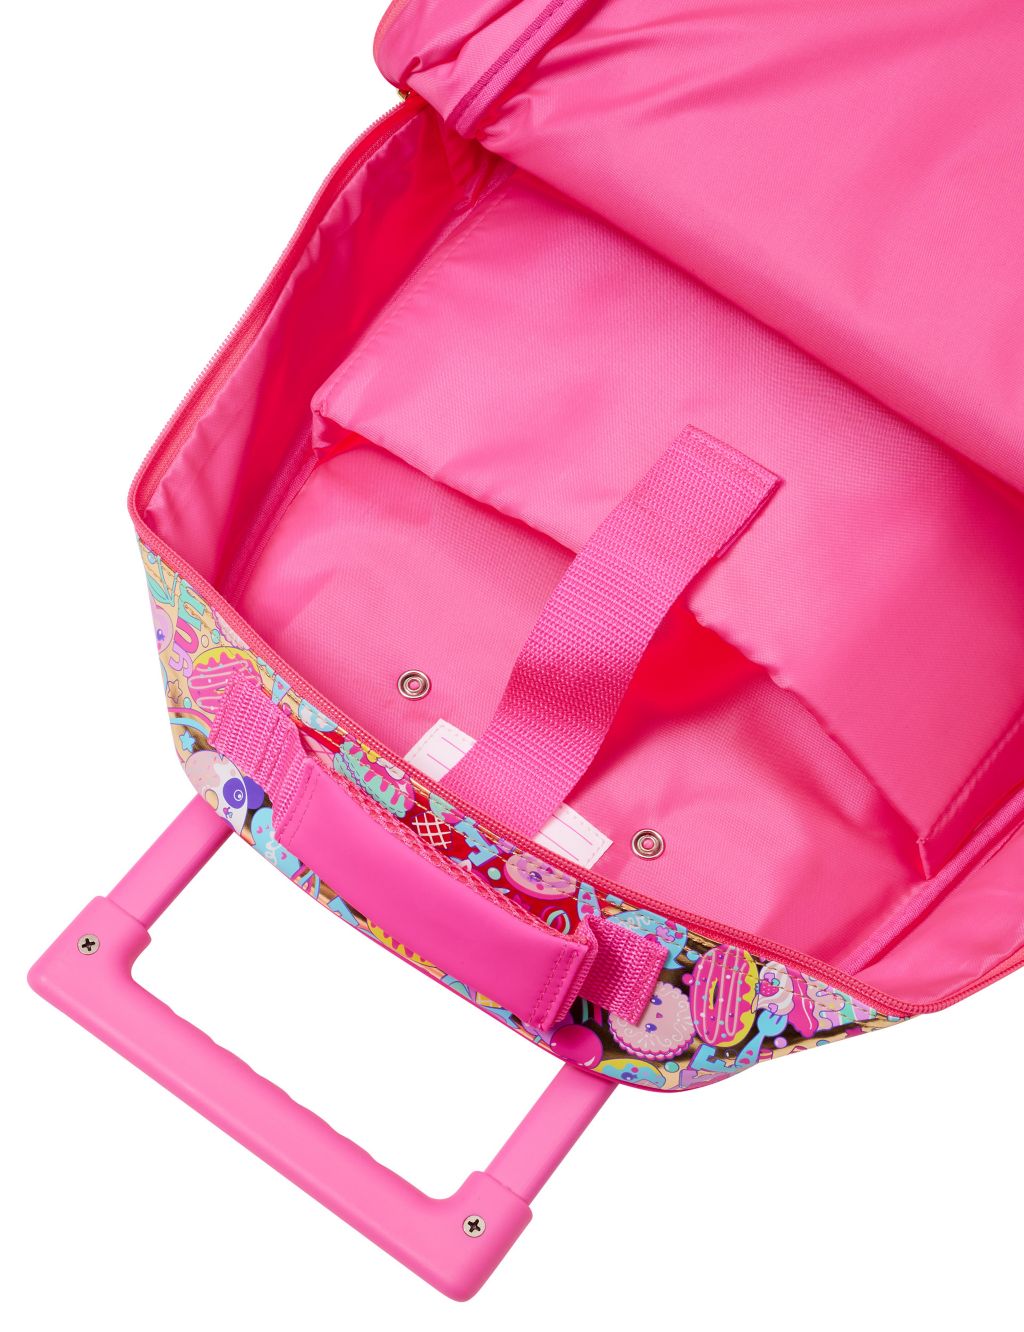 Kids' Patterned Trolley Backpack image 2